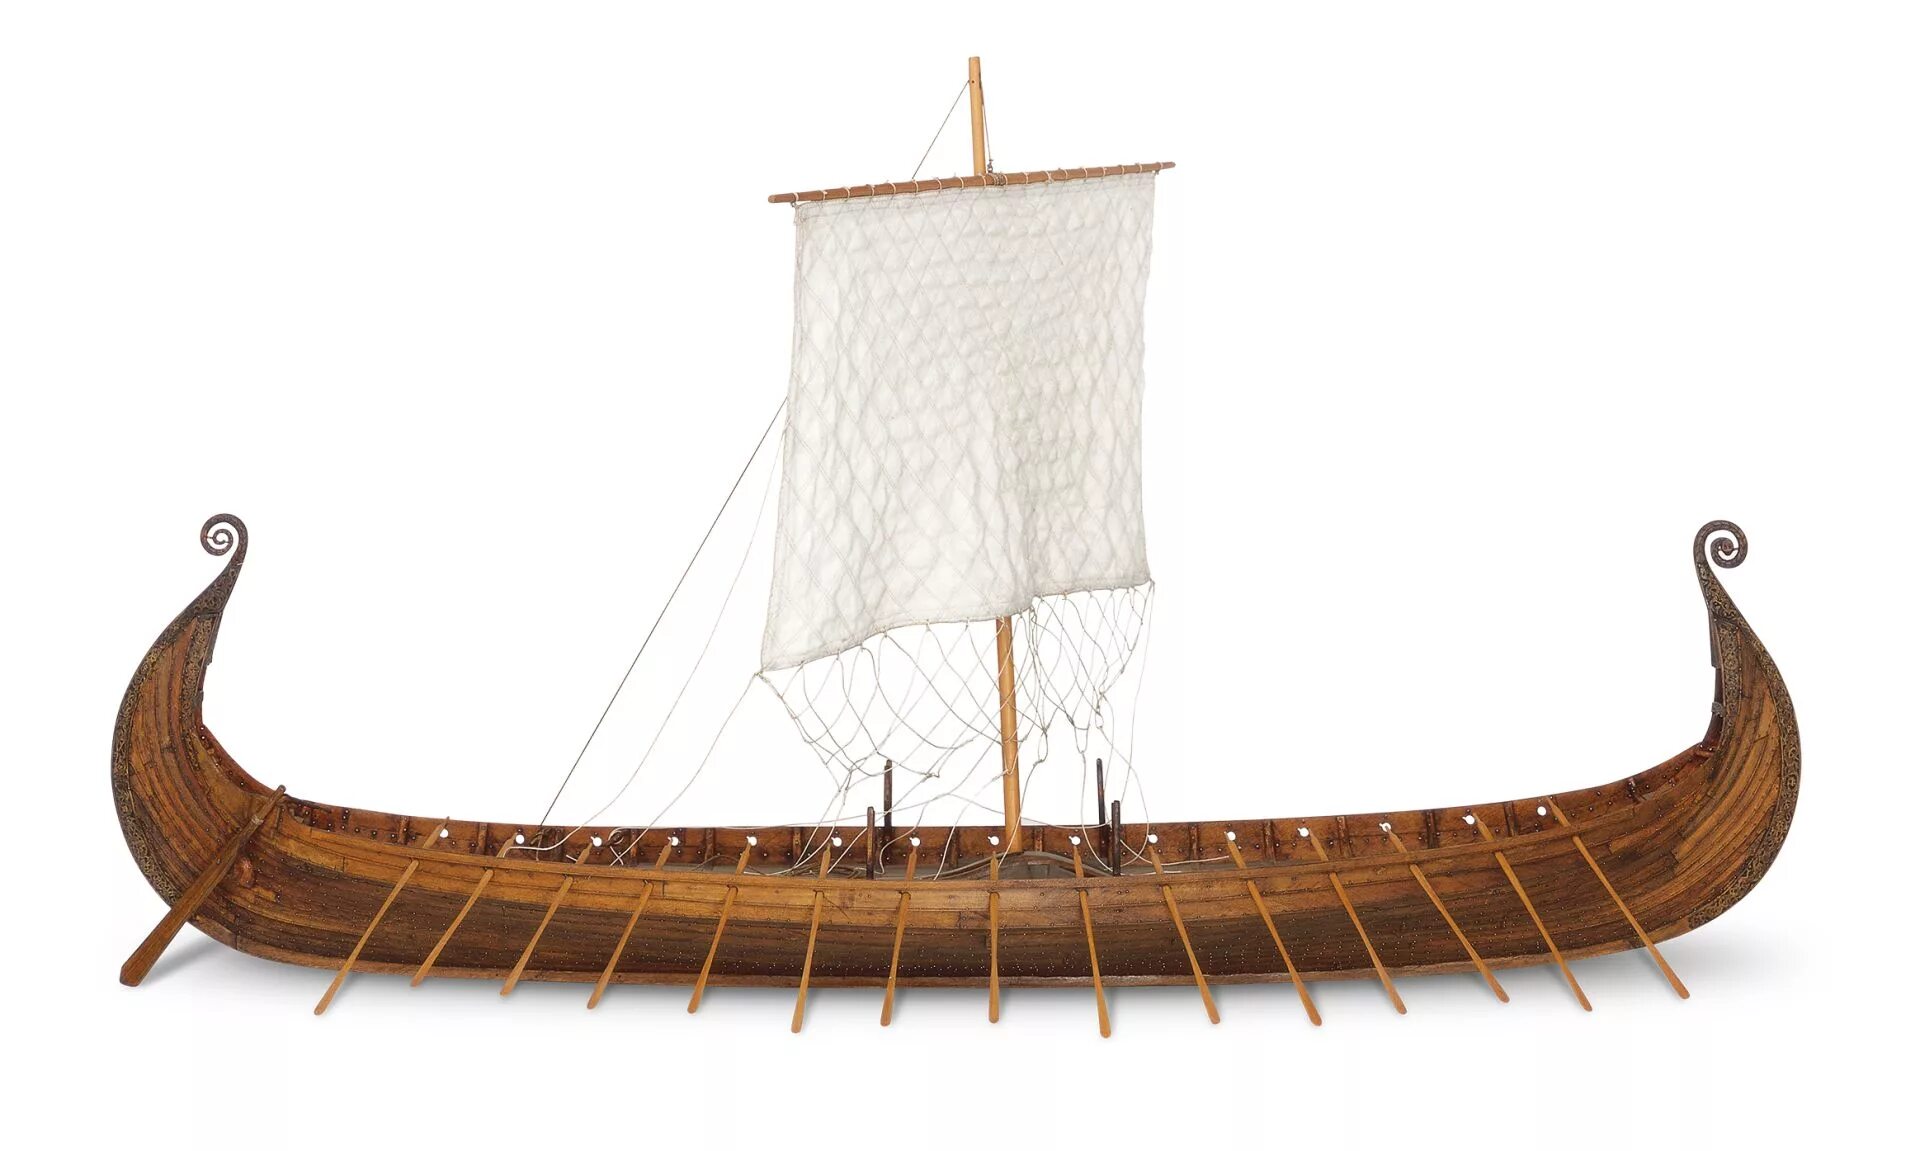 Ладья картинка. Дракар корабль викингов. Ладья Драккар викингов. Корабль викингов сбоку. Дракар викингов сбоку.